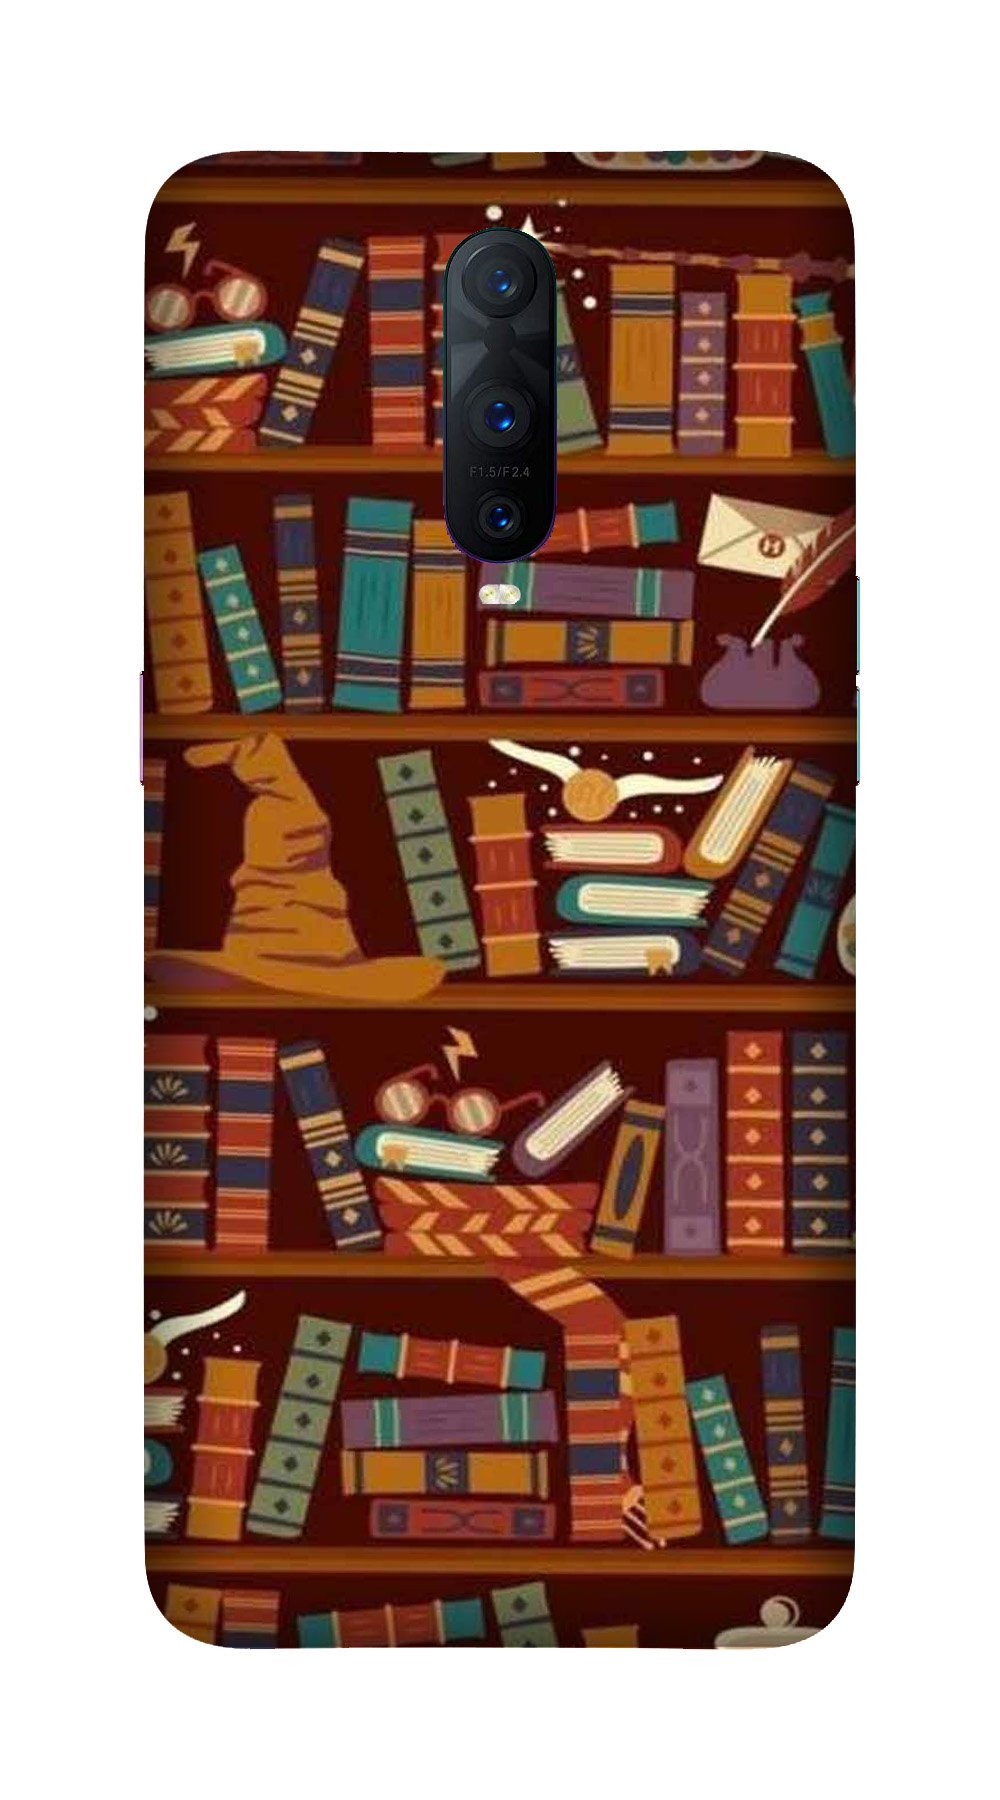 Book Shelf Mobile Back Case for OnePlus 7 Pro (Design - 390)